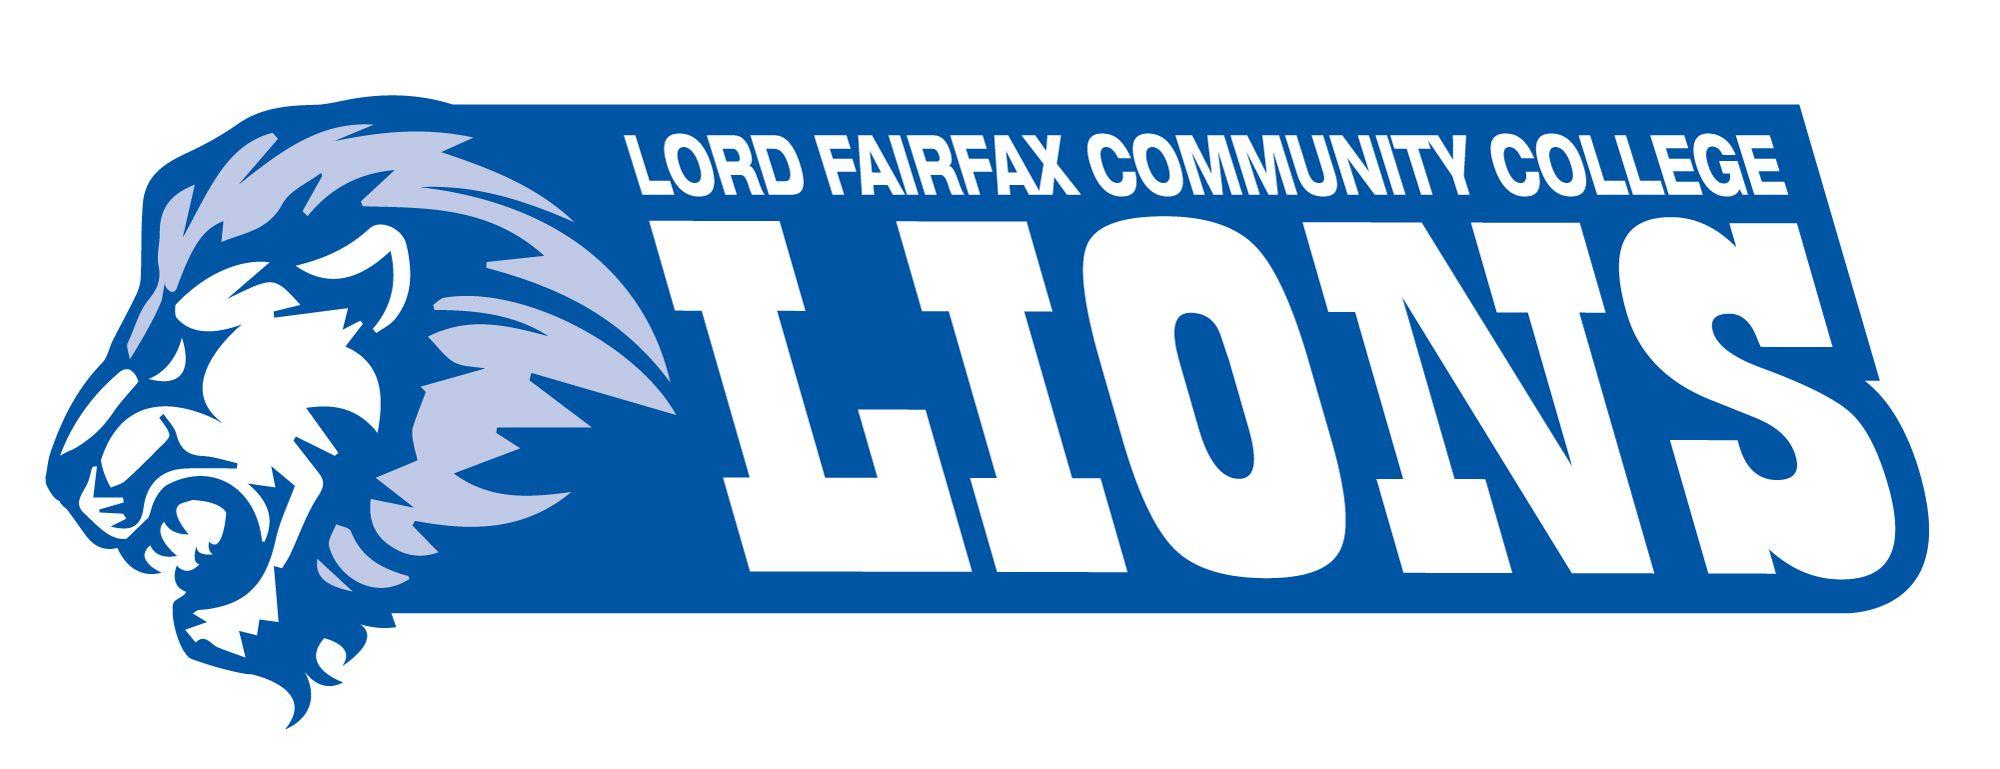 Fairfax Logo - LFCC Logo Files | Lord Fairfax Community College